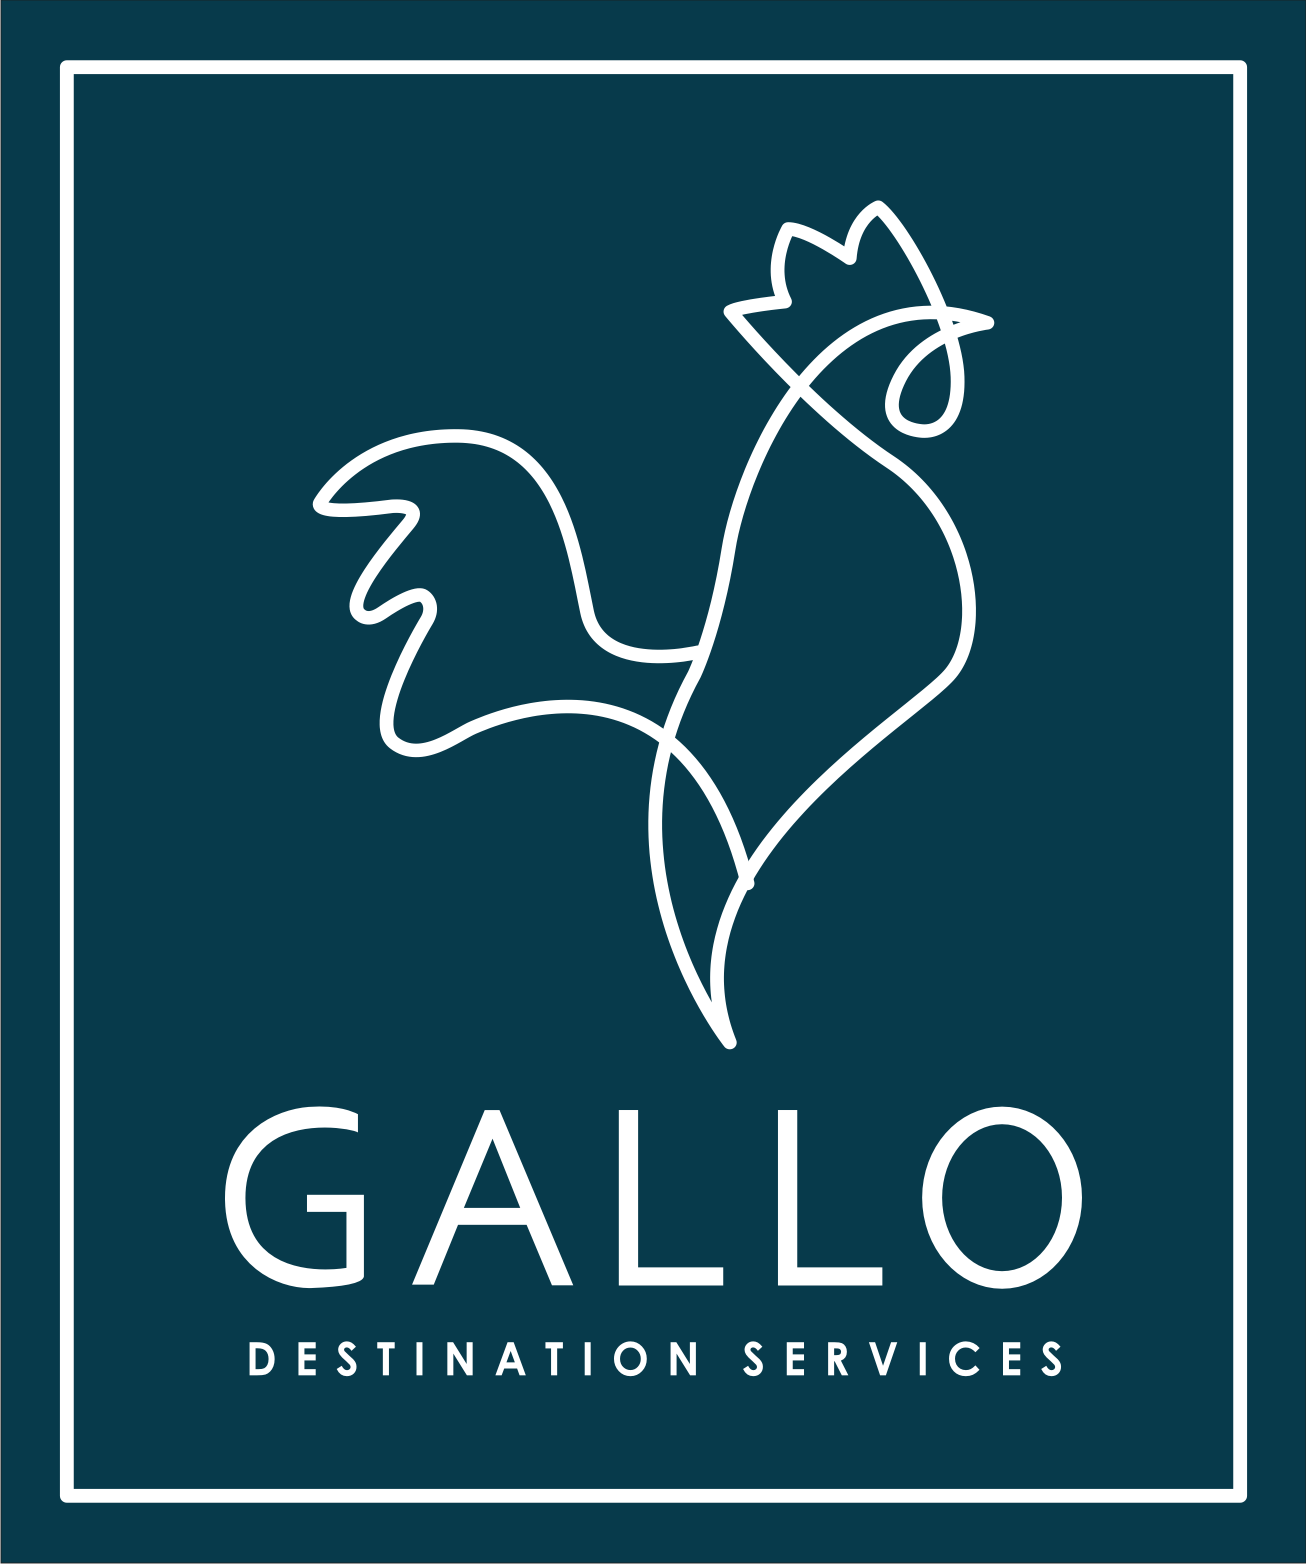 ▷ ¡Gallo Destination Services! | Premium Services | Travel in style and comfort